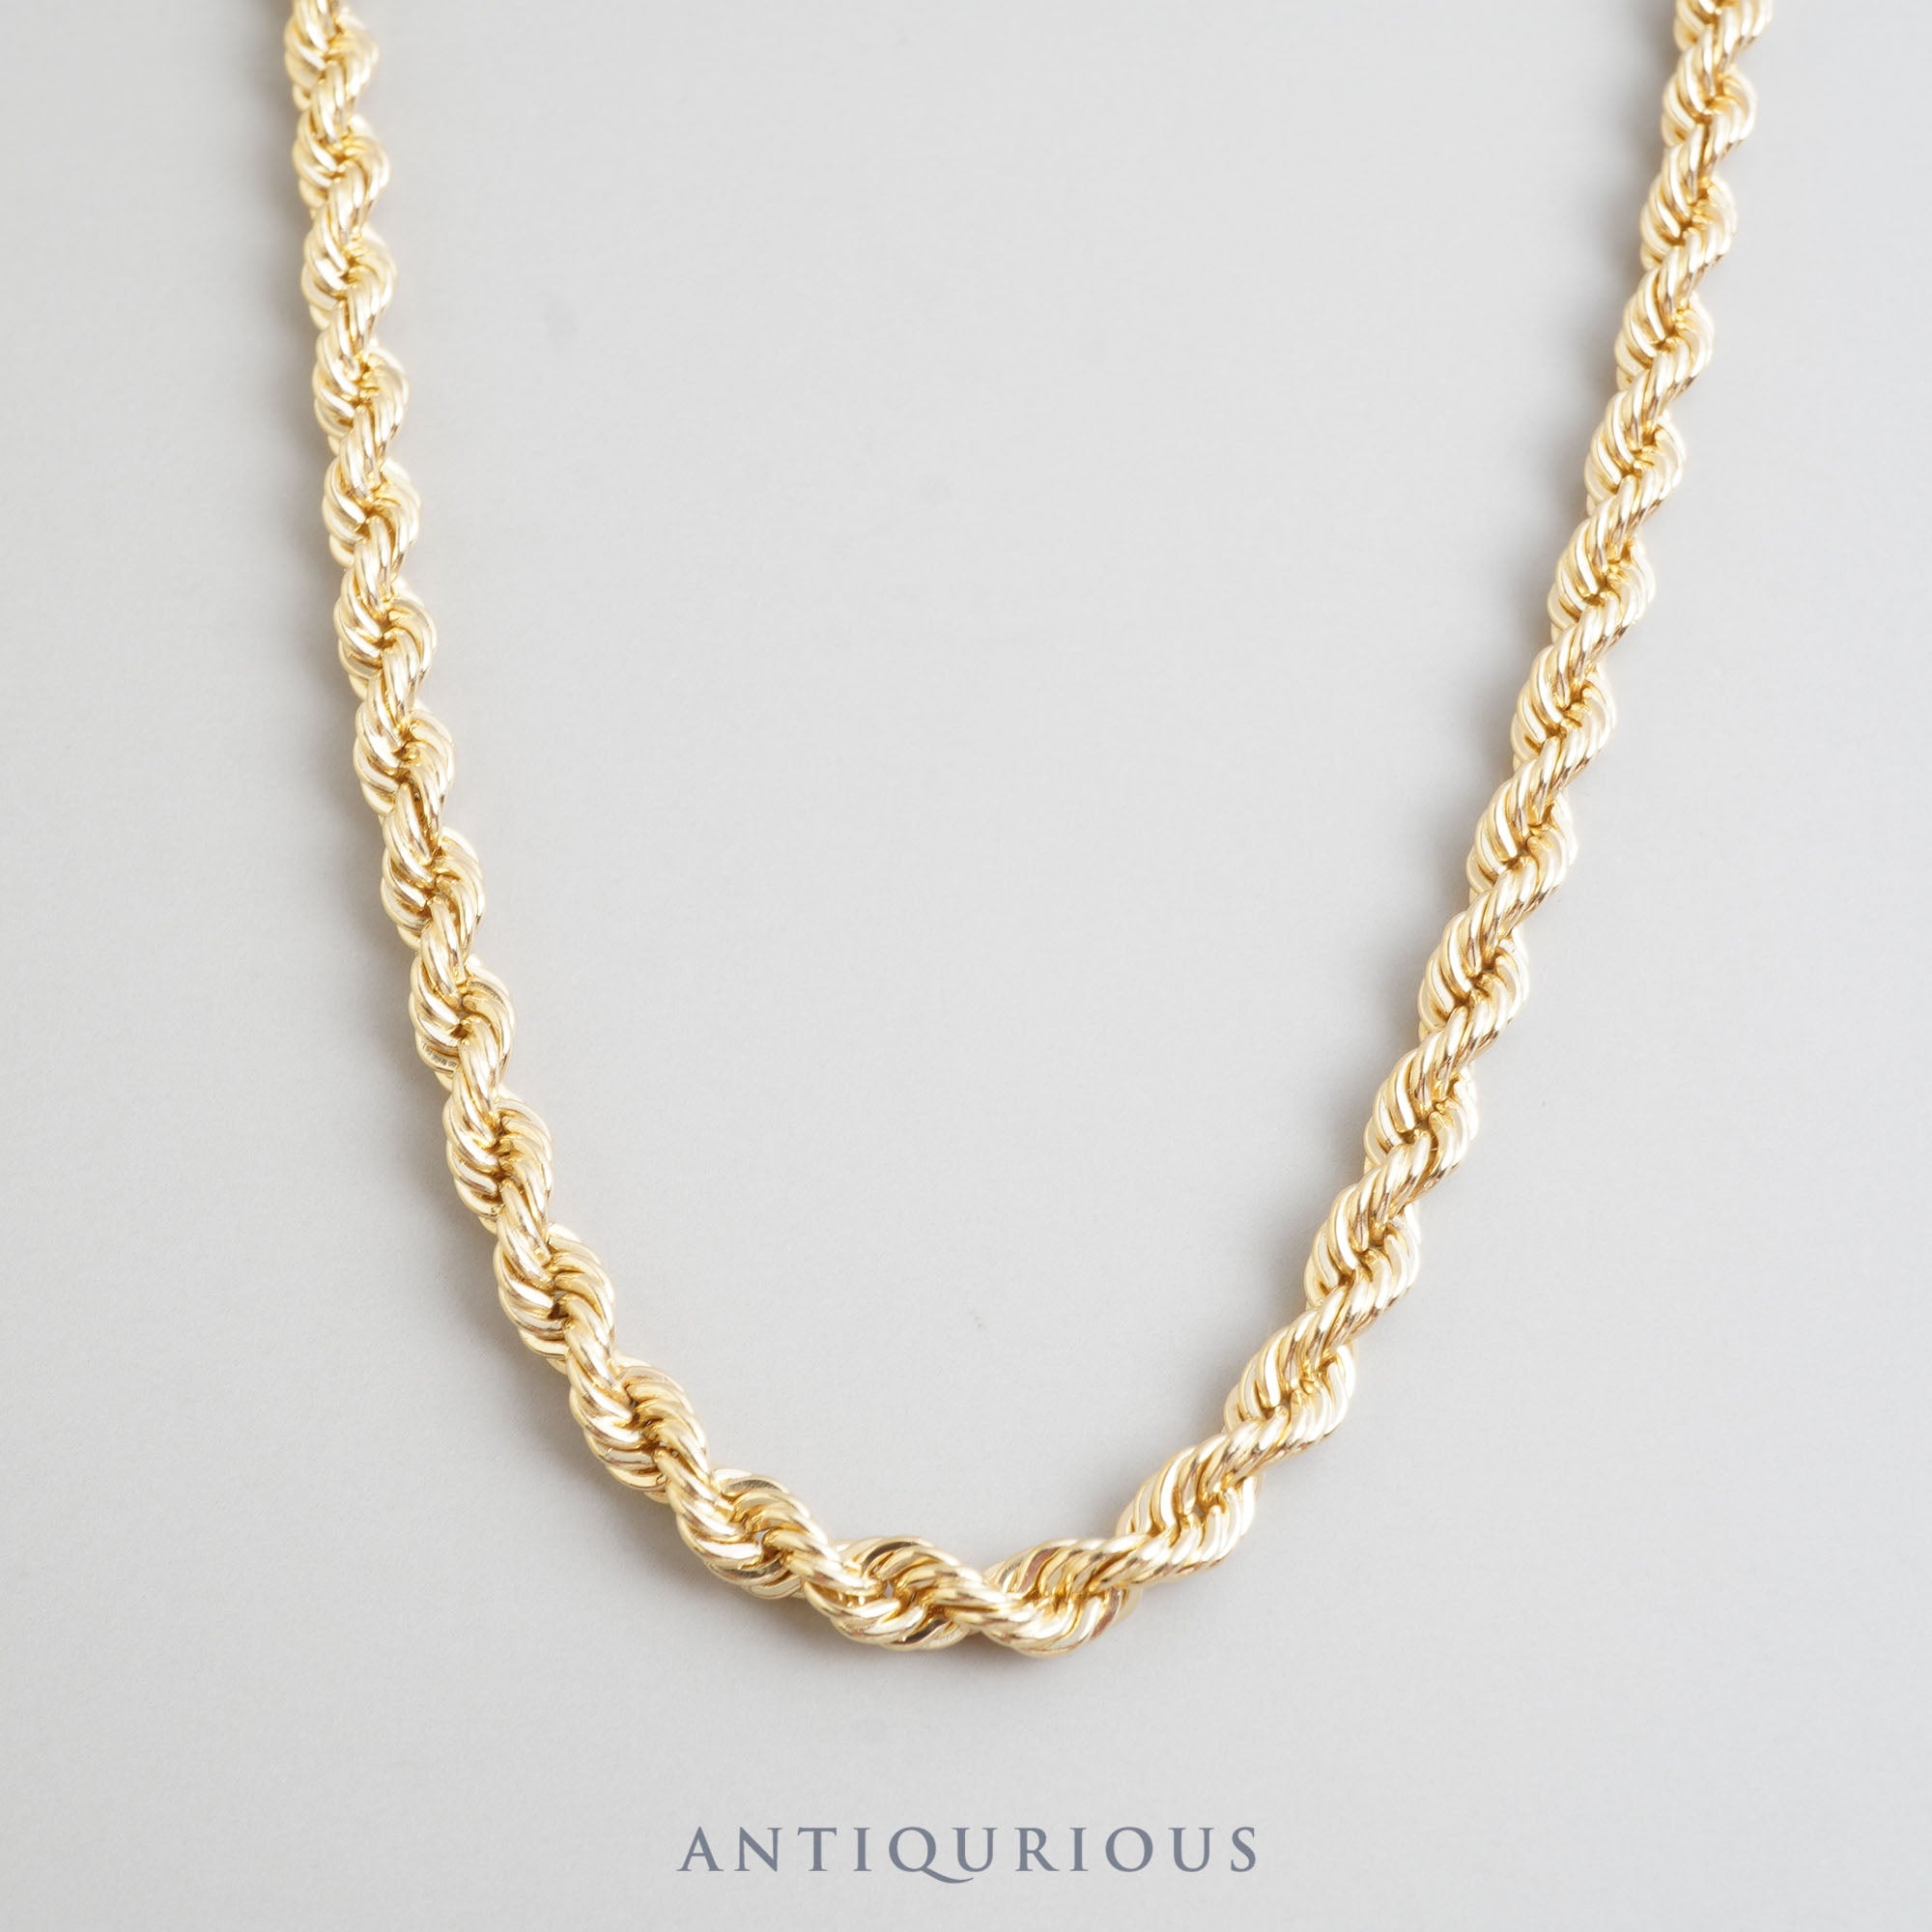 TIFFANY Tiffany necklace vintage long chain